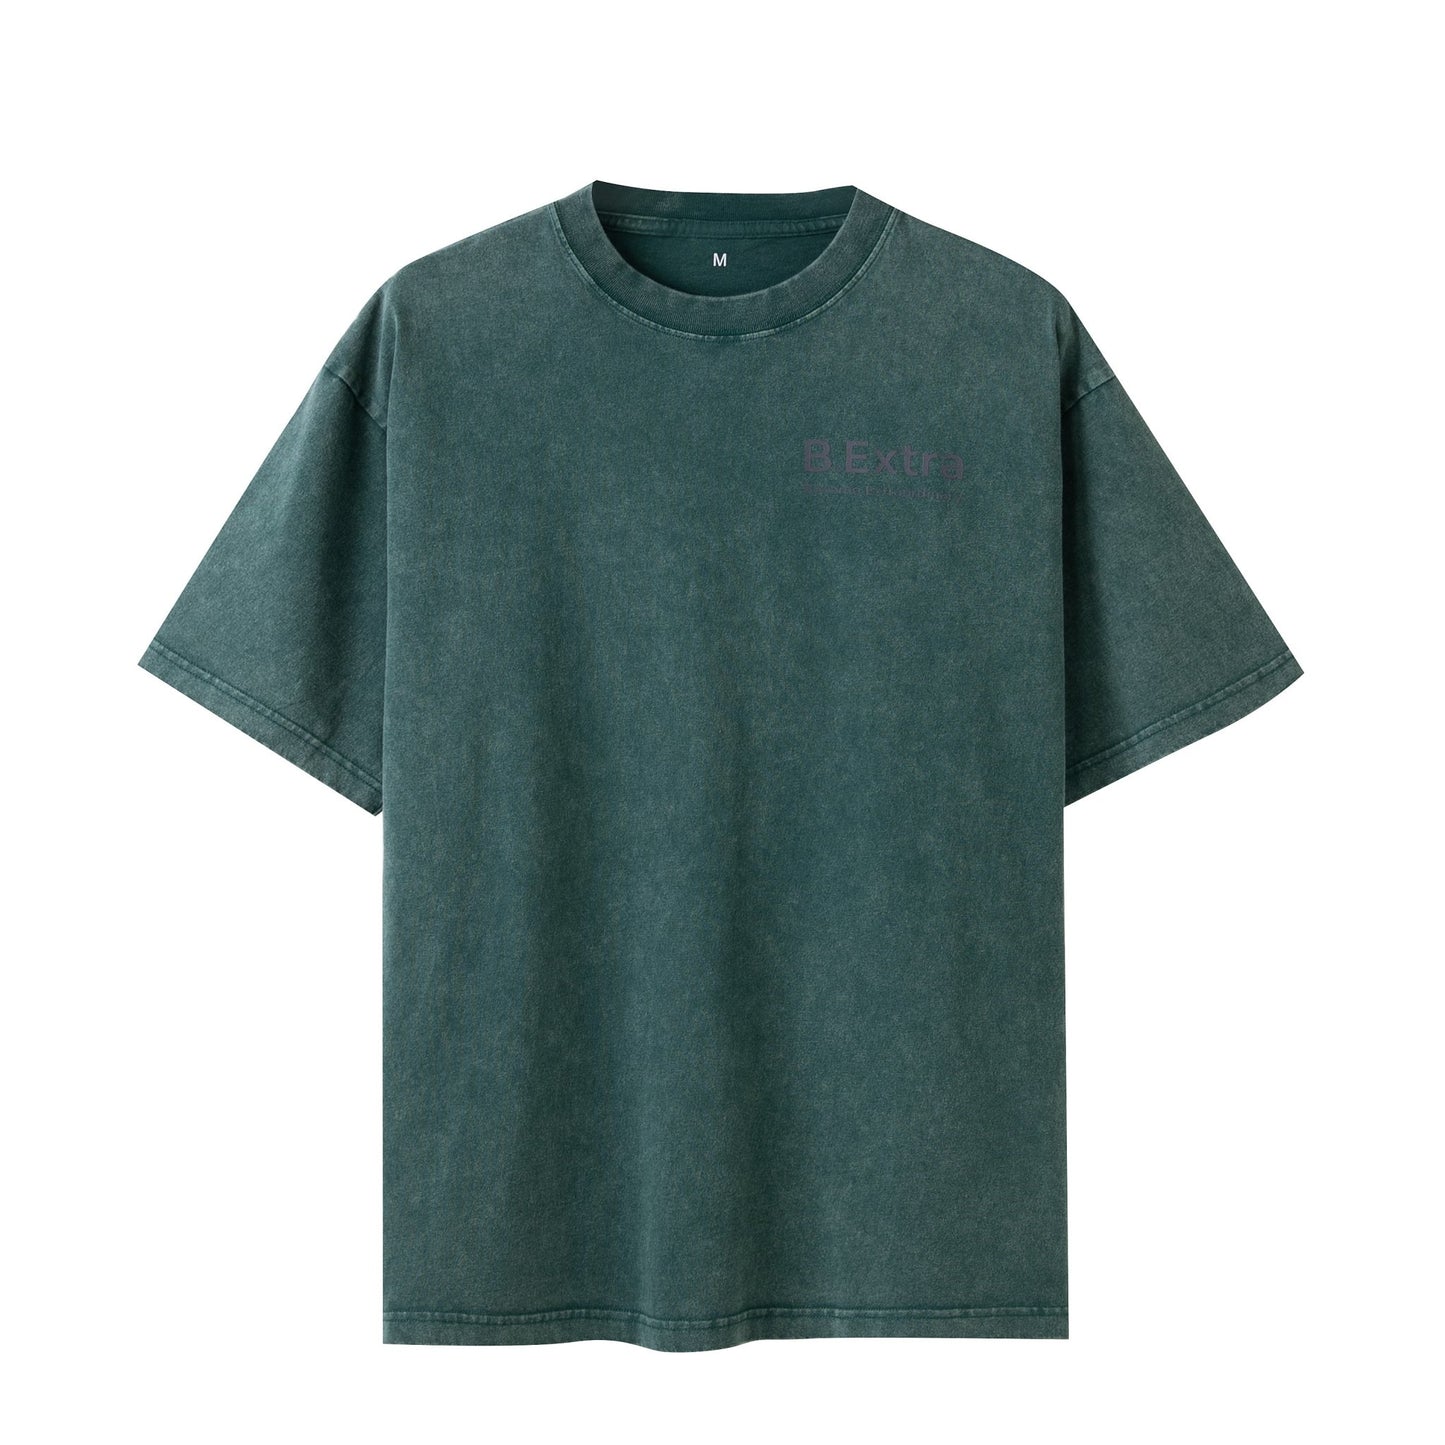 Acid Wash T shirt - Green/Grey